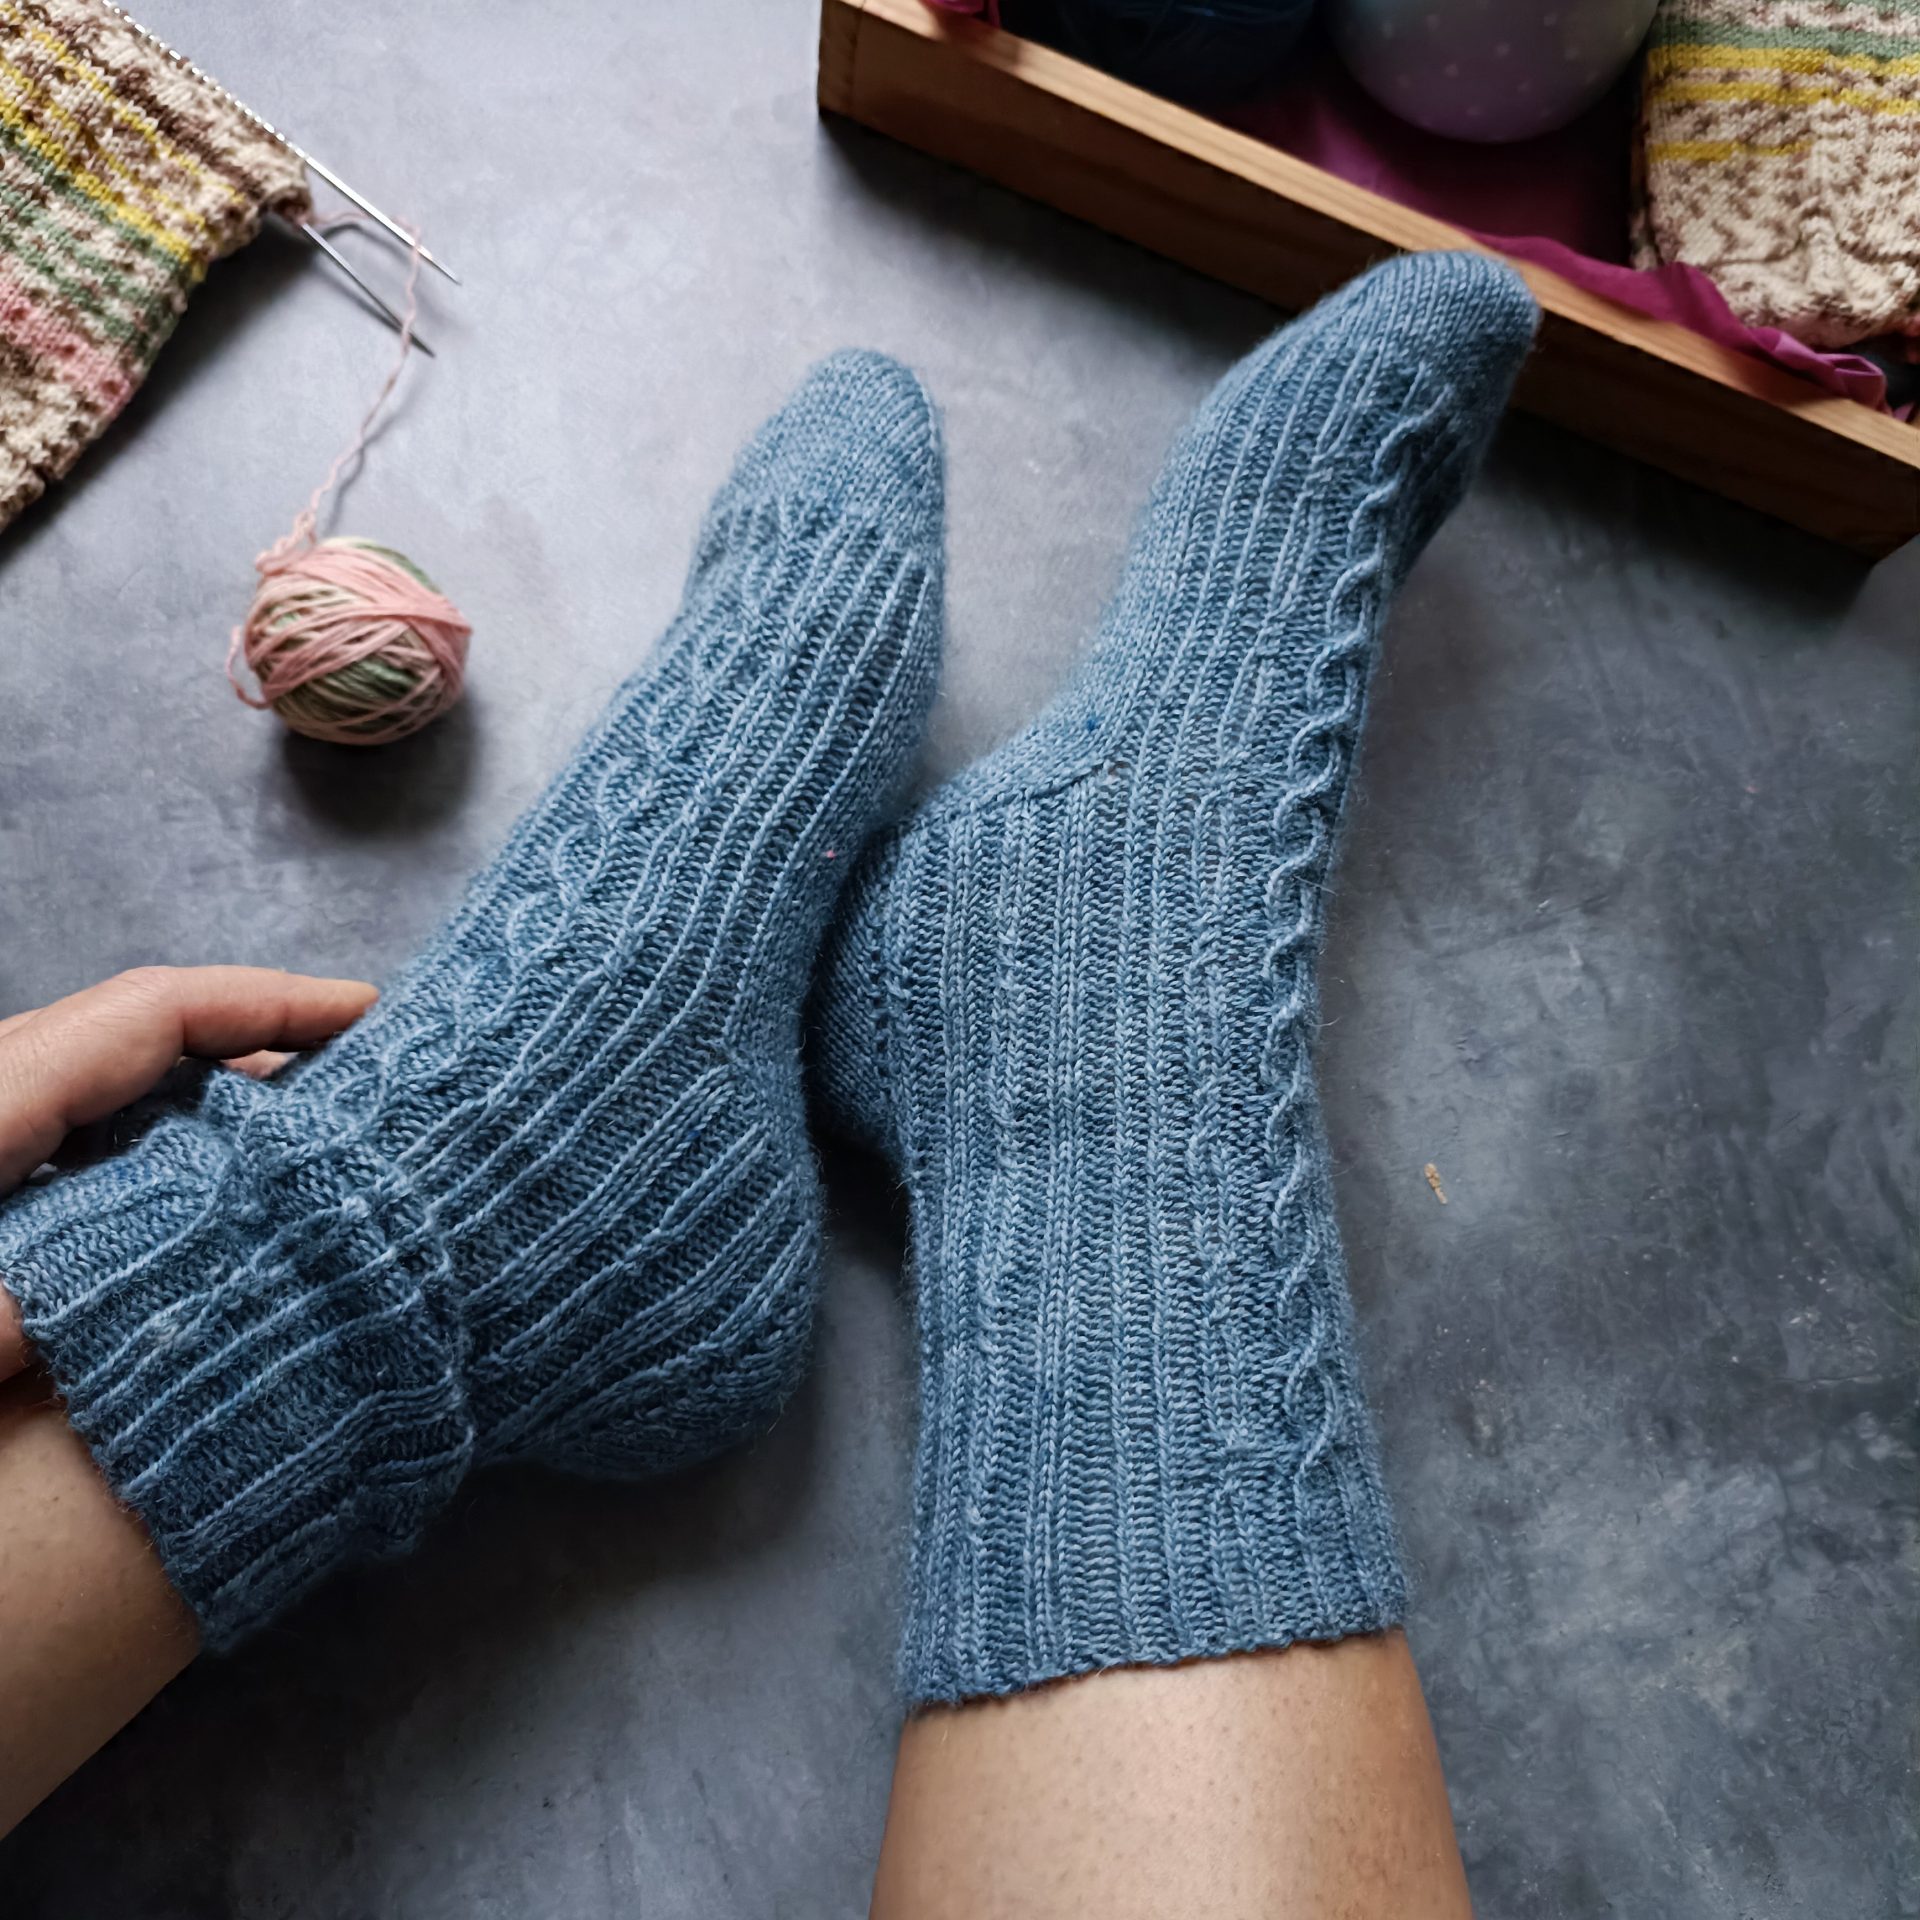 A pair of handmade blue knitted wool socks